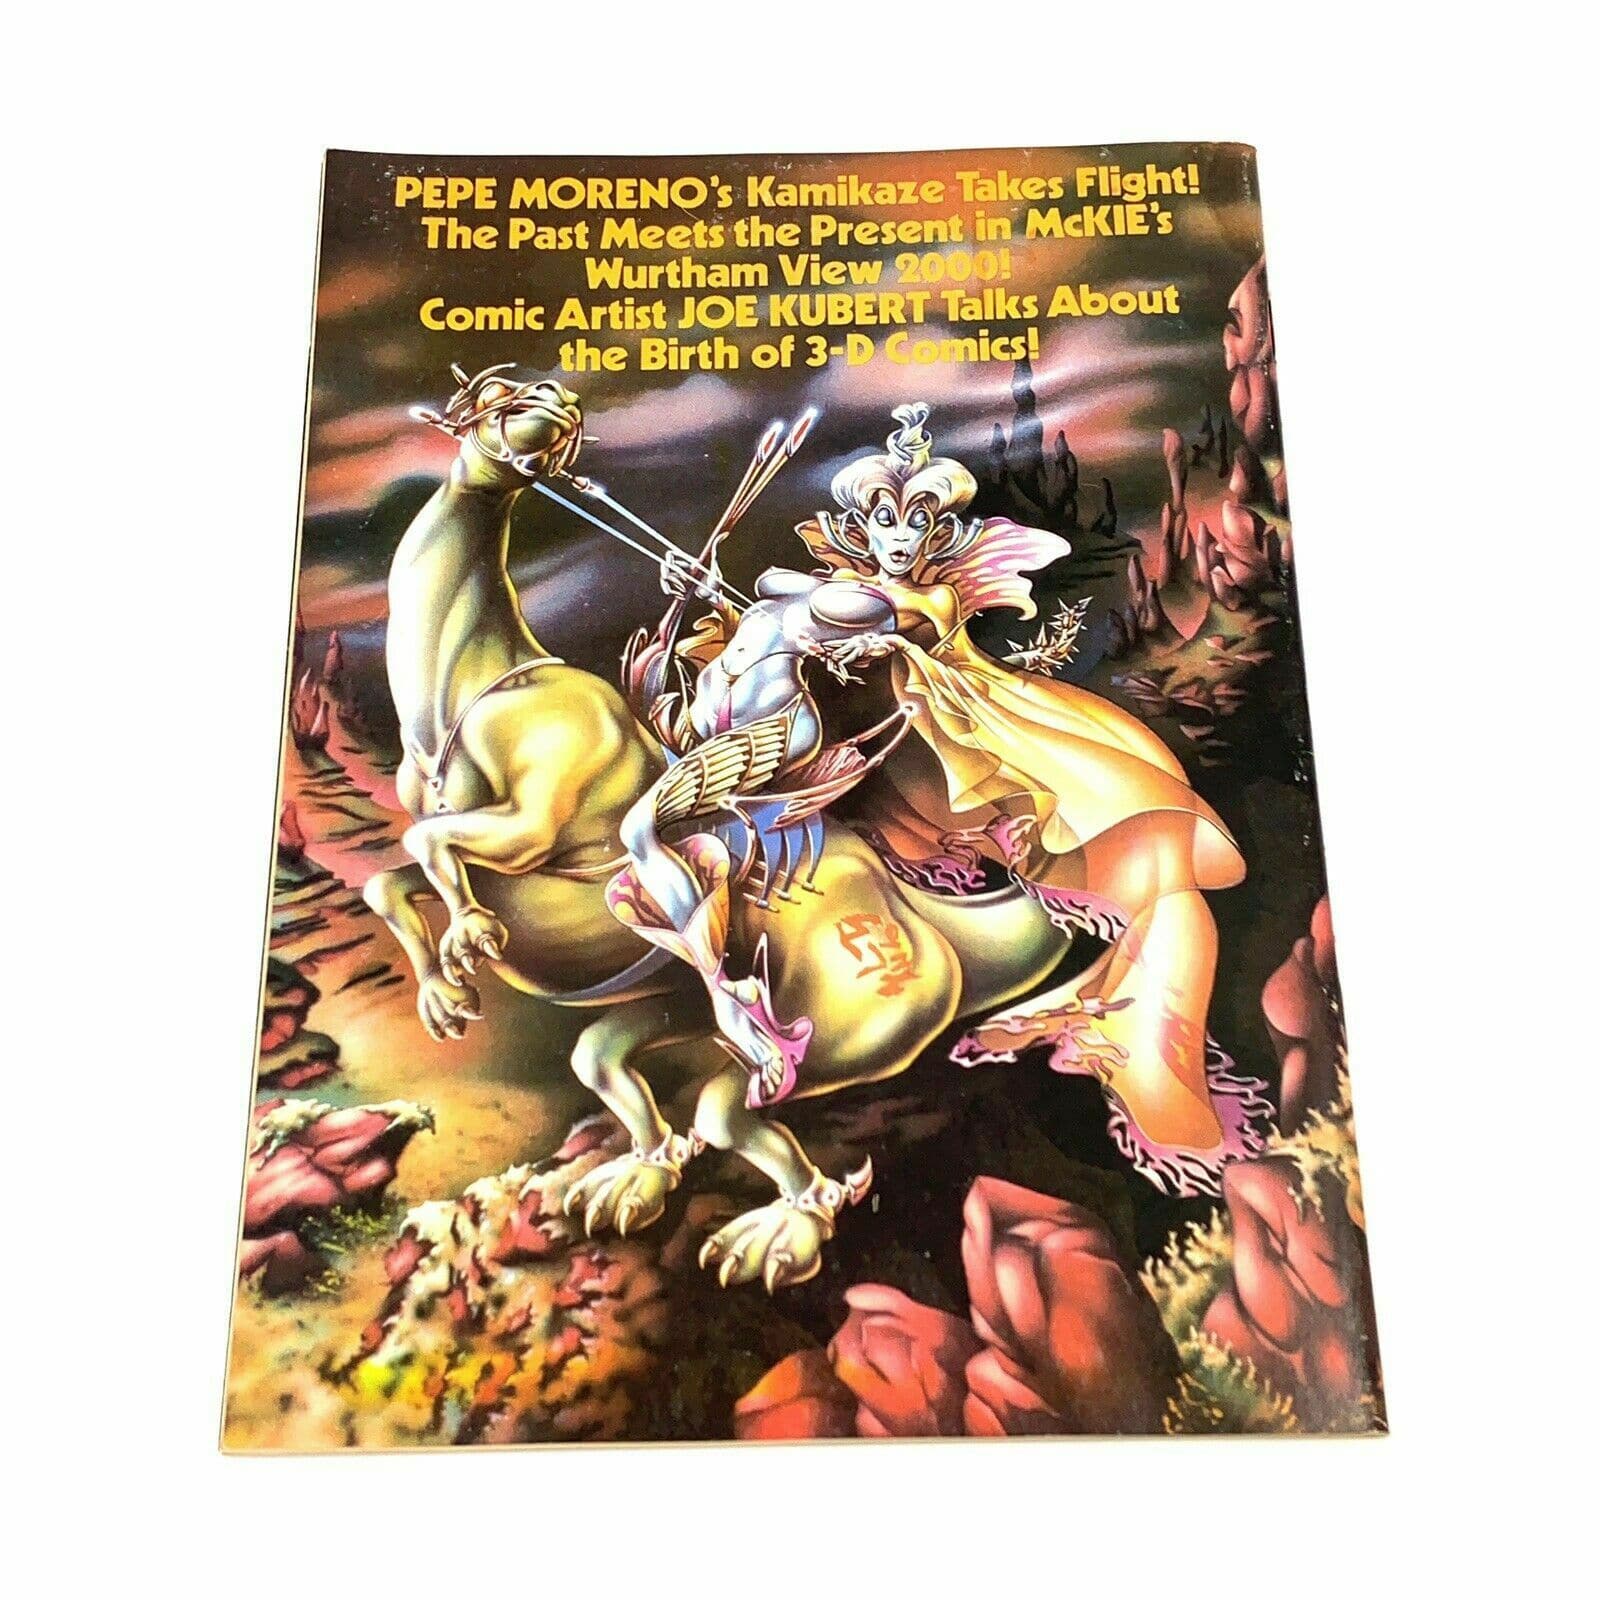 HEAVY METAL - Adult Illustrative Fantasy Magazine - April 1984 - parsimonyshoppes